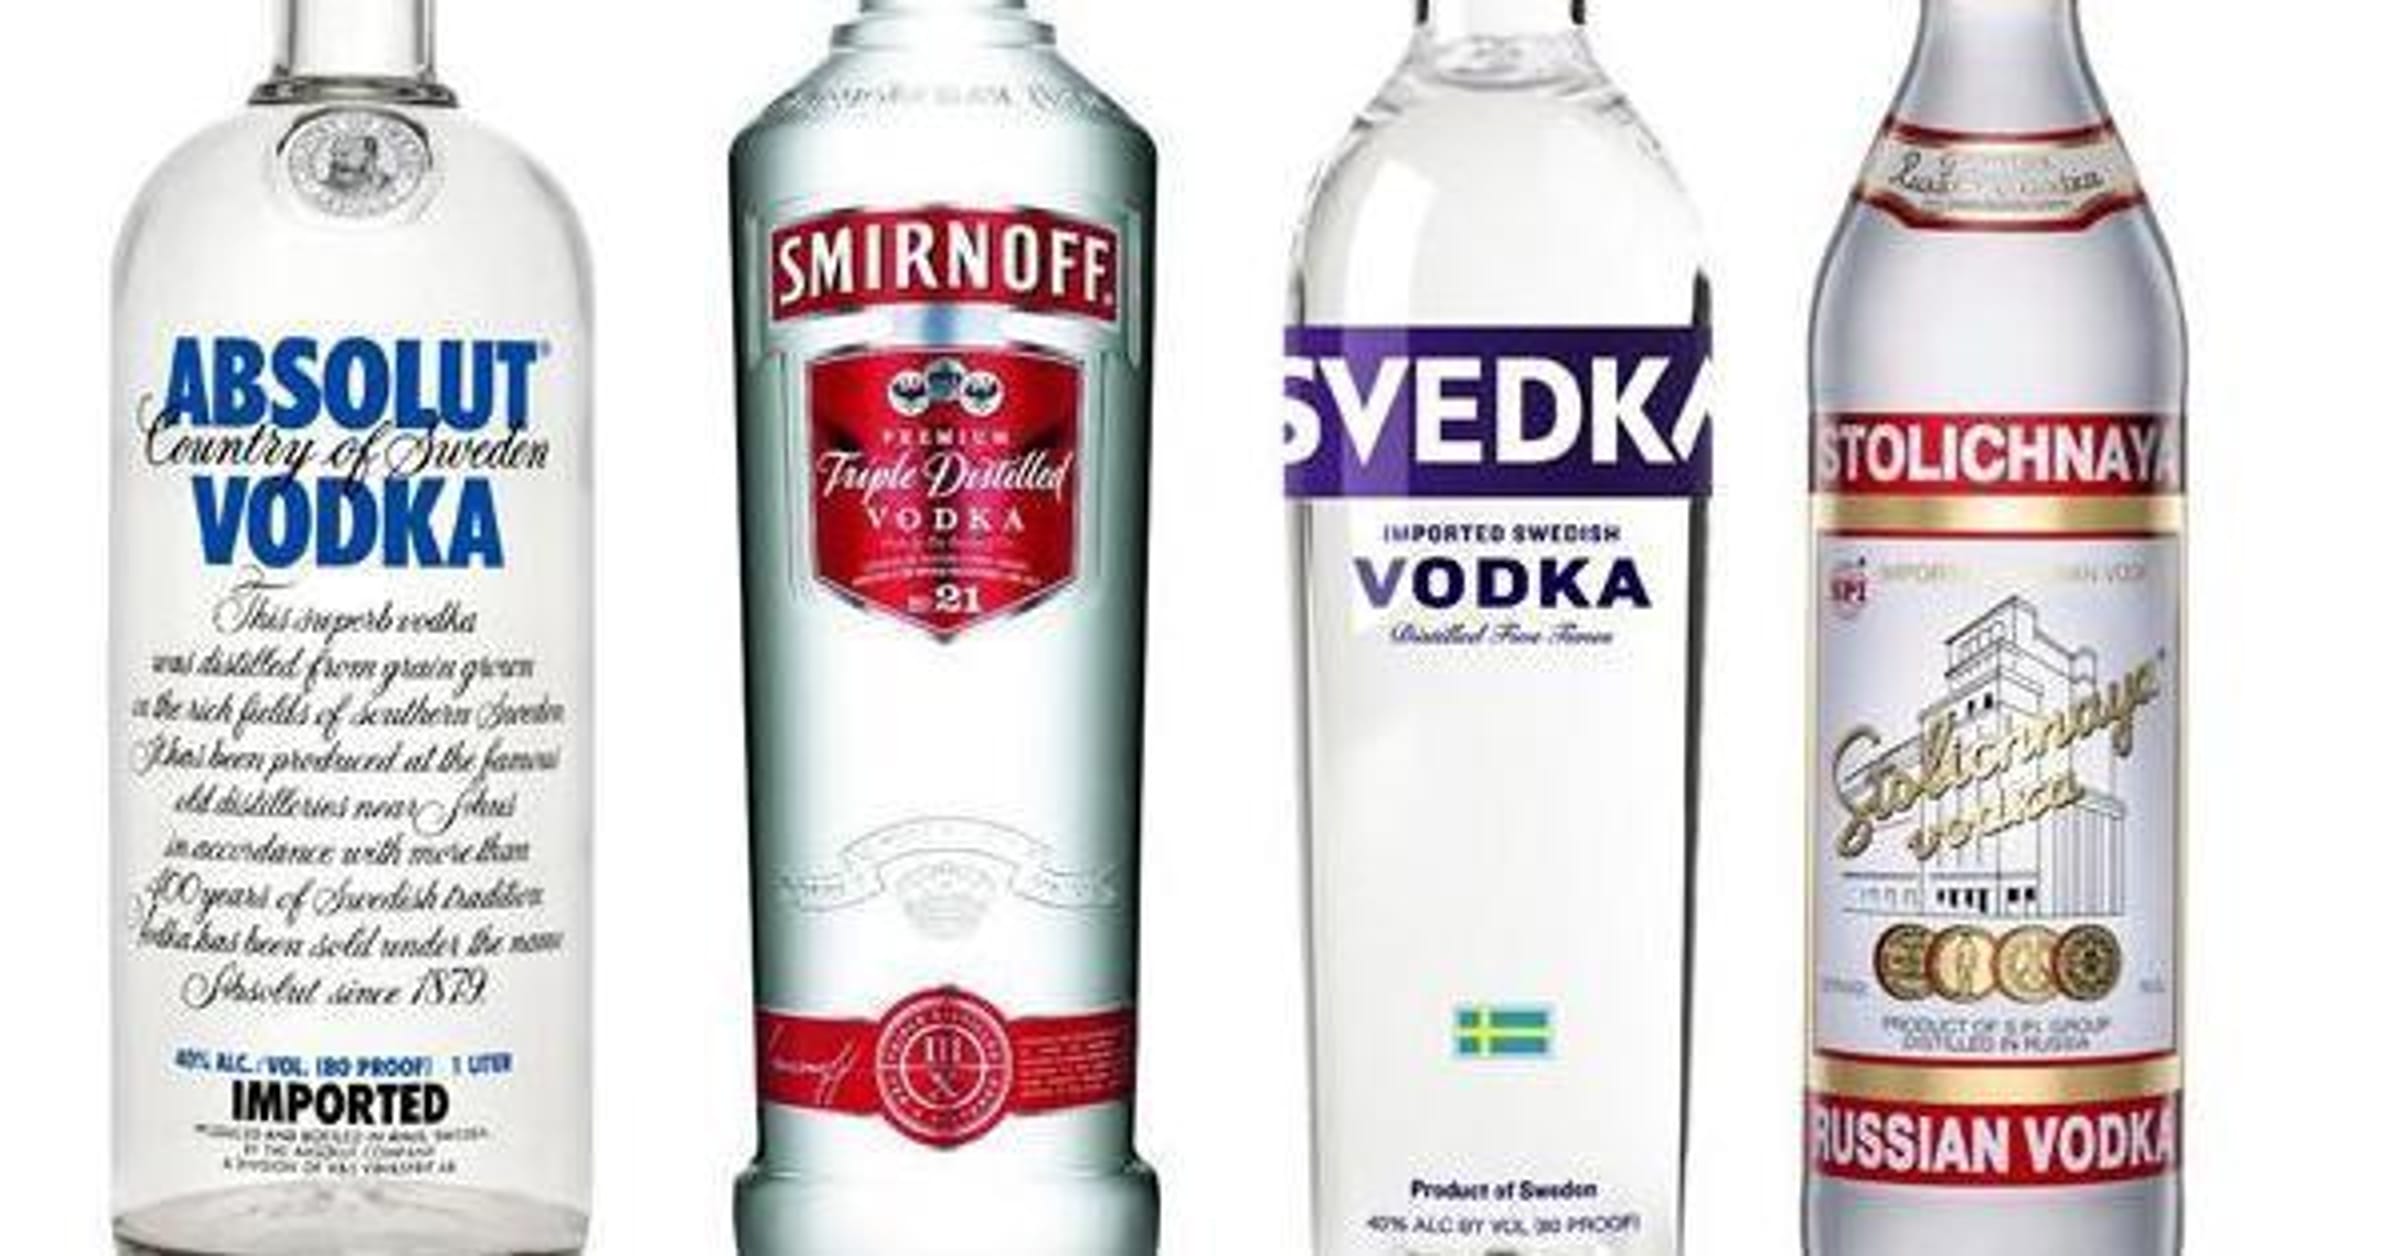 https://imgix.ranker.com/list_img_v2/8142/2288142/original/the-best-cheap-vodka-brands-u2?fit=crop&fm=pjpg&q=80&dpr=2&w=1200&h=720